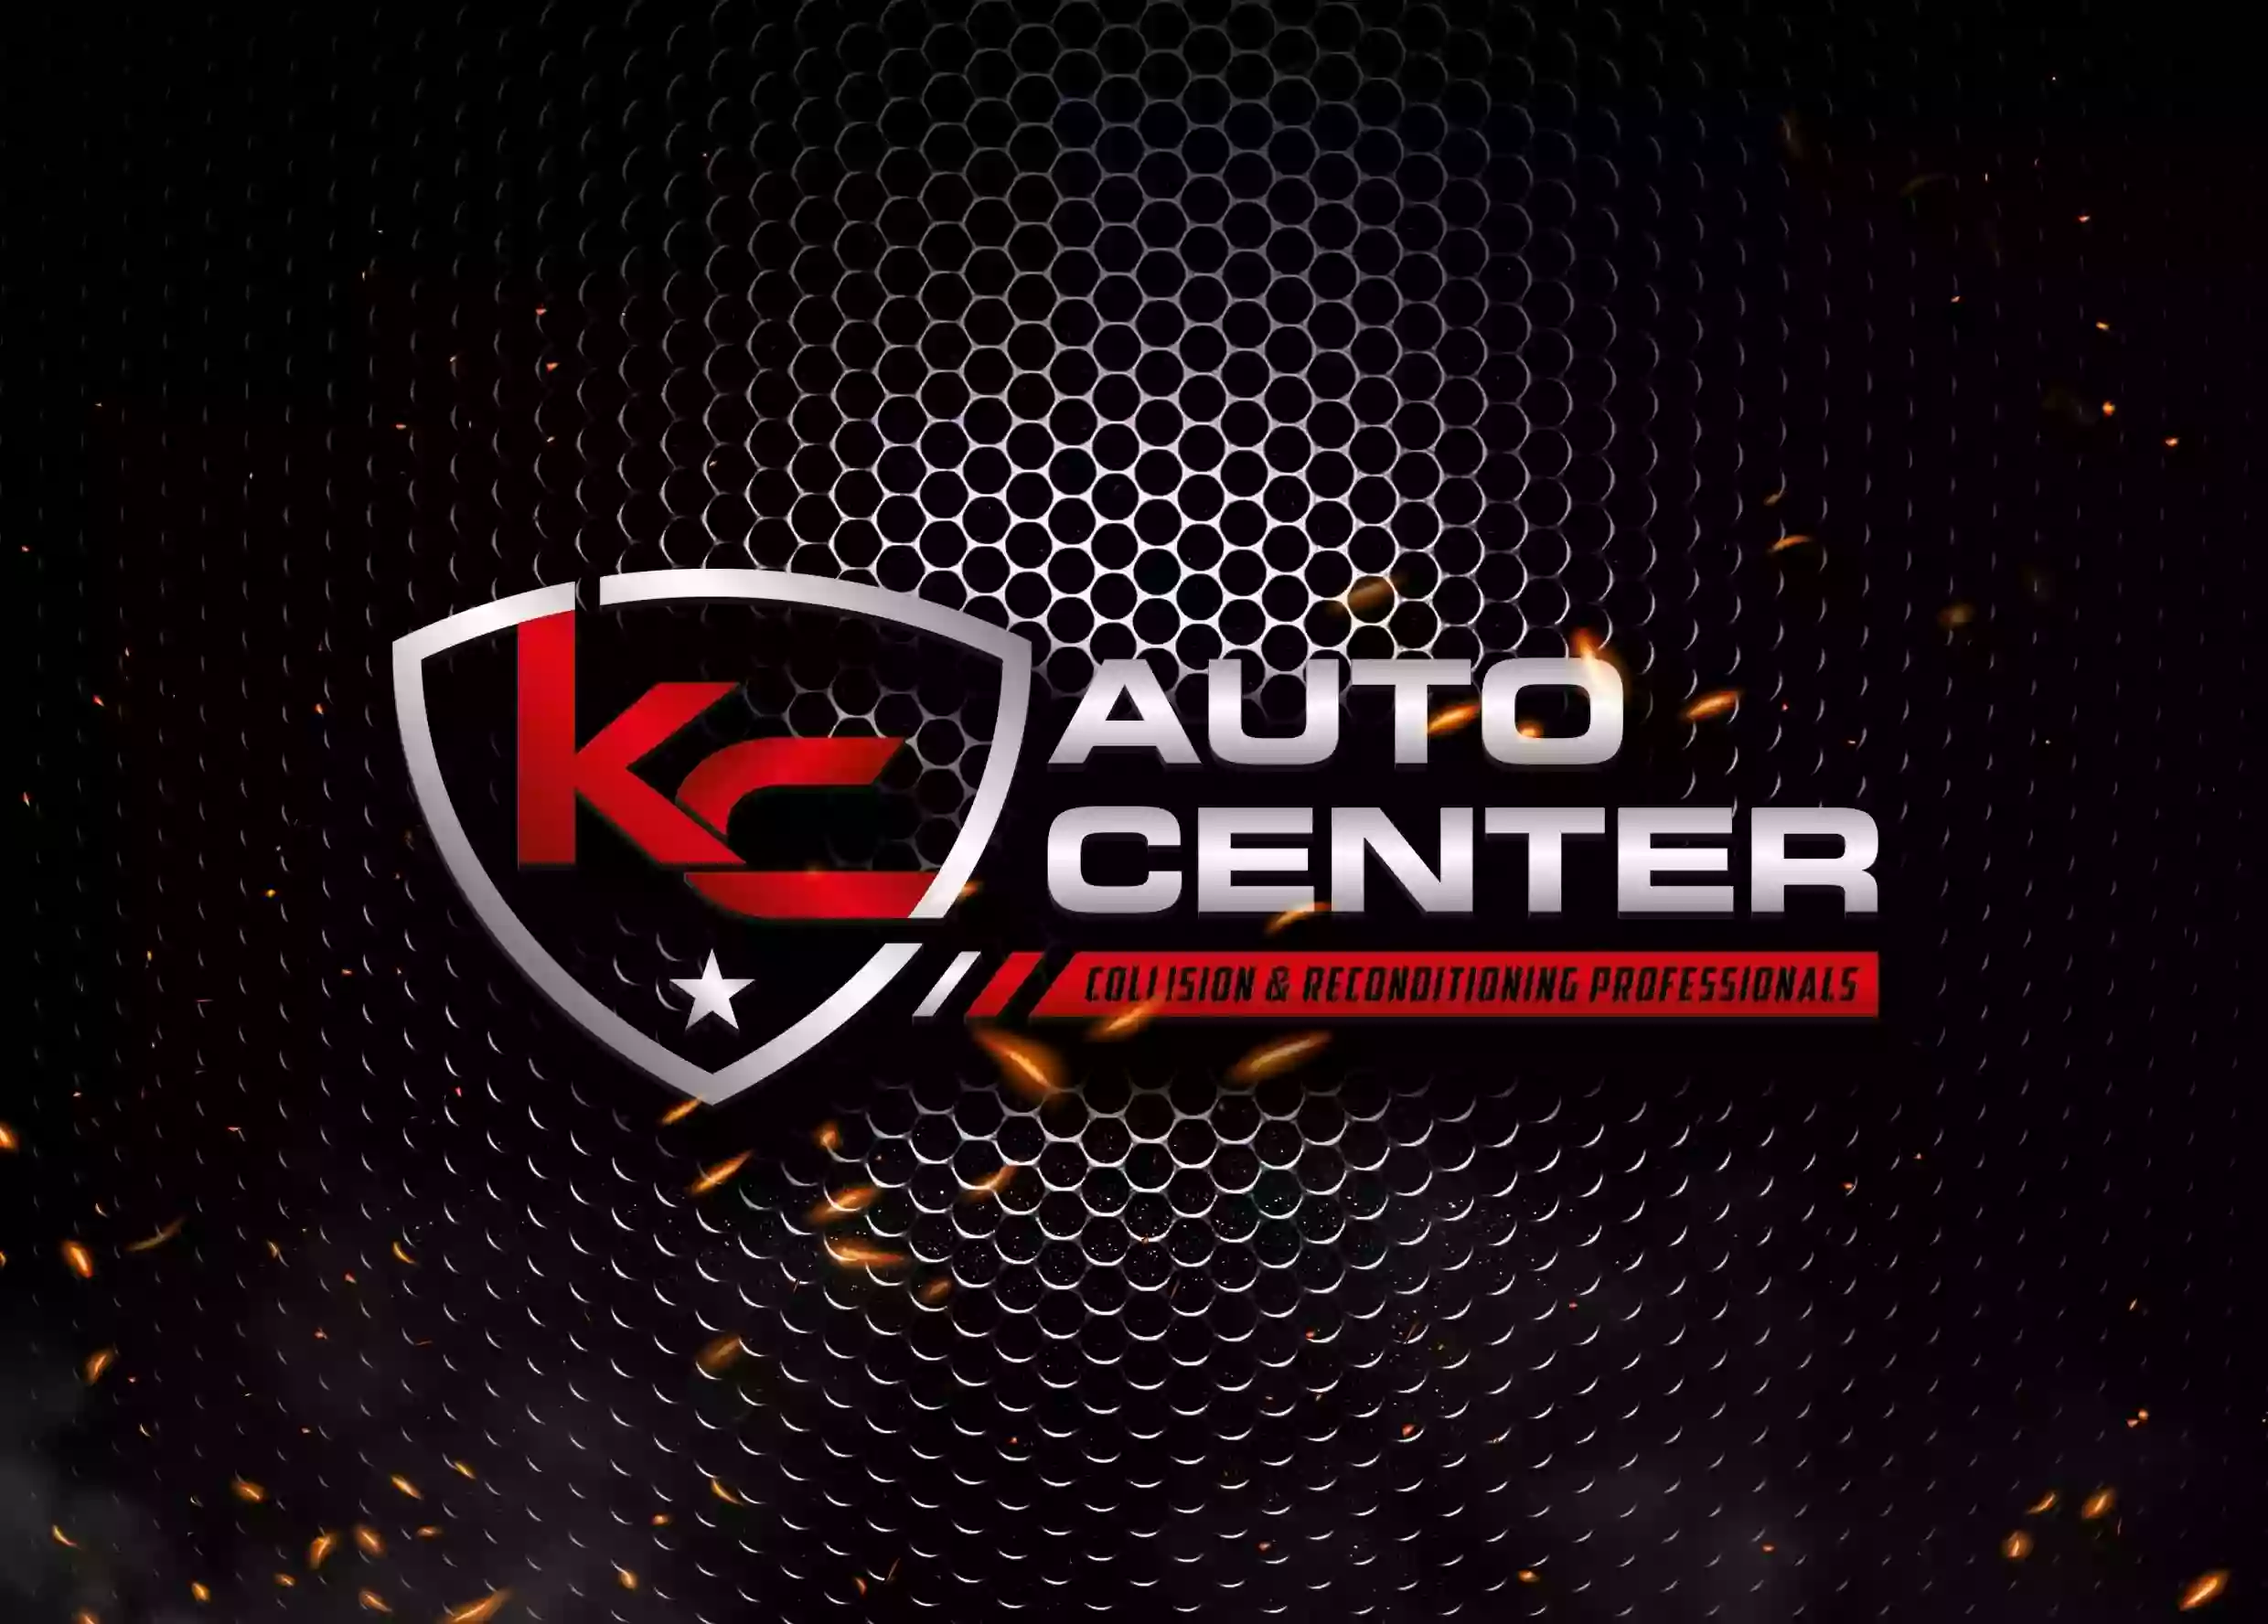 KC Auto Center